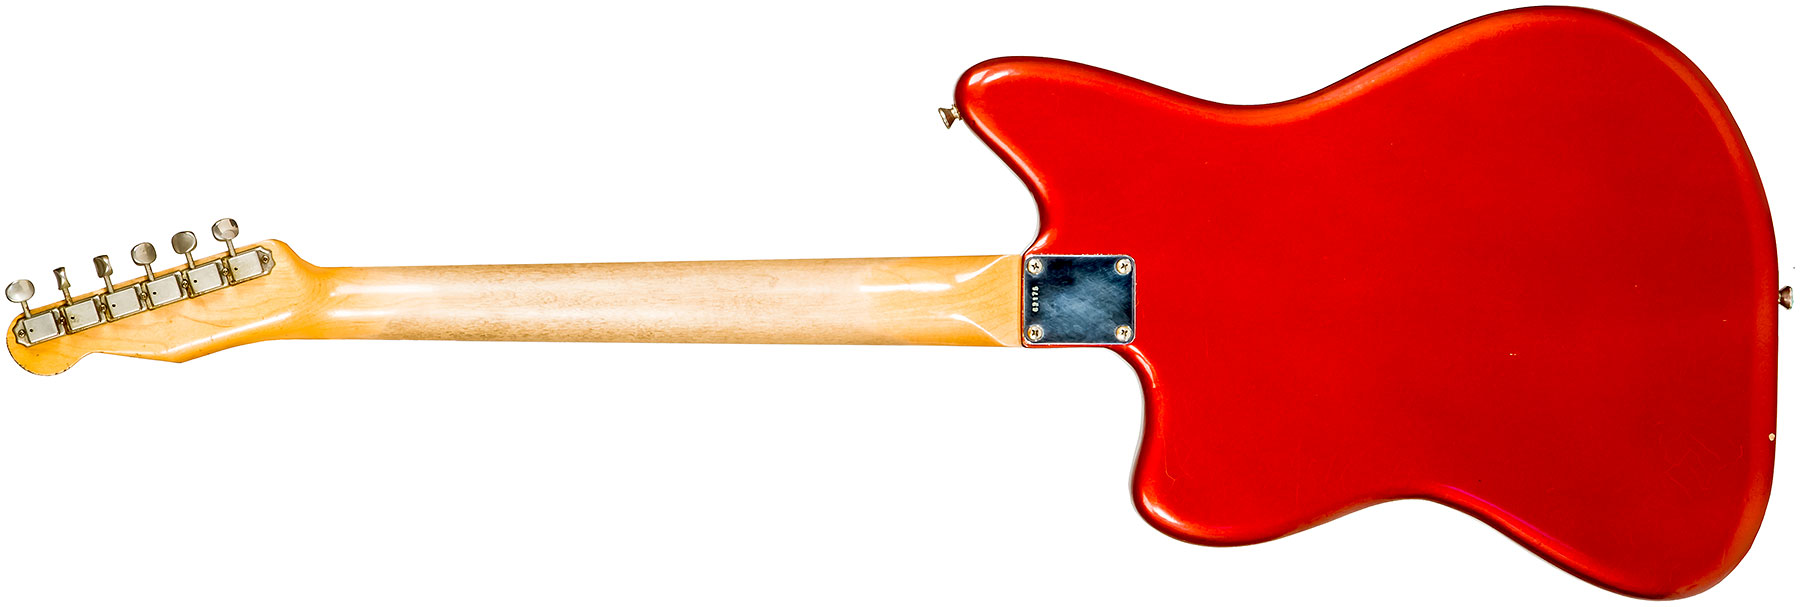 Rebelrelic Wrangler 2h Trem Rw #62175 - Light Aged Candy Apple Red - Semi-Hollow E-Gitarre - Variation 1